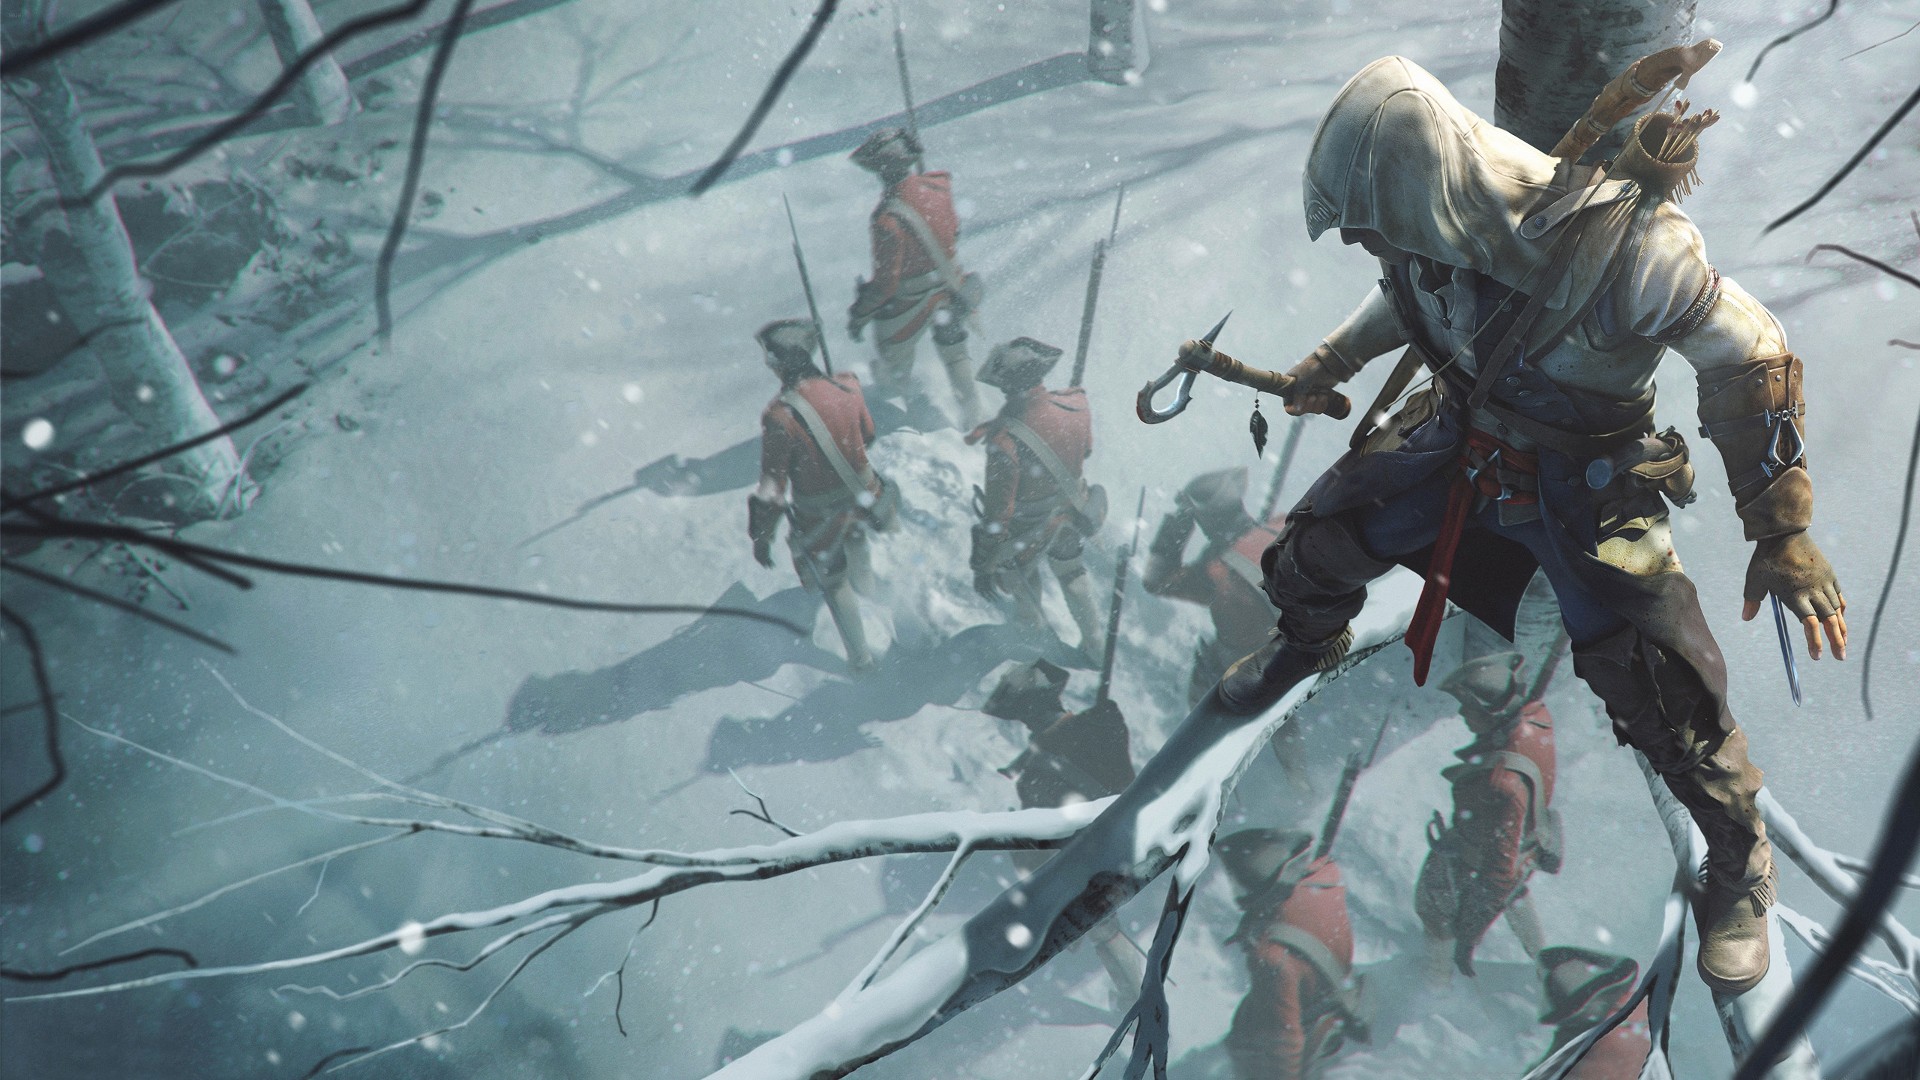 Assassin's Creed III Art